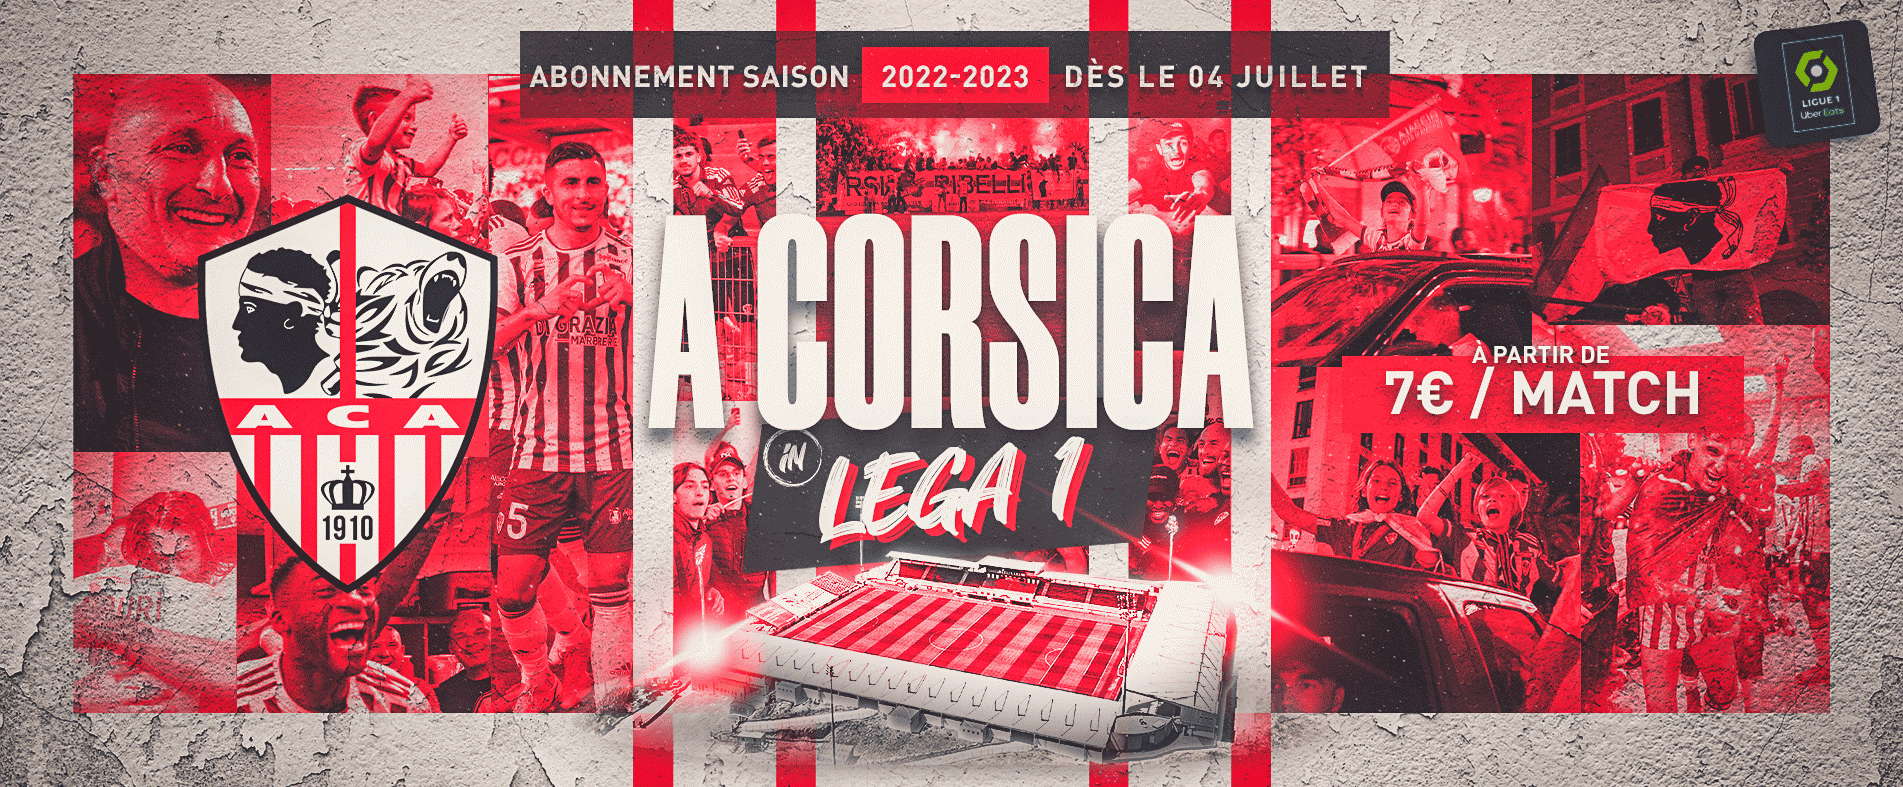 A CORSICA IN LEGA 1 AC AJACCIO ABONNEMENTS 2022-2023